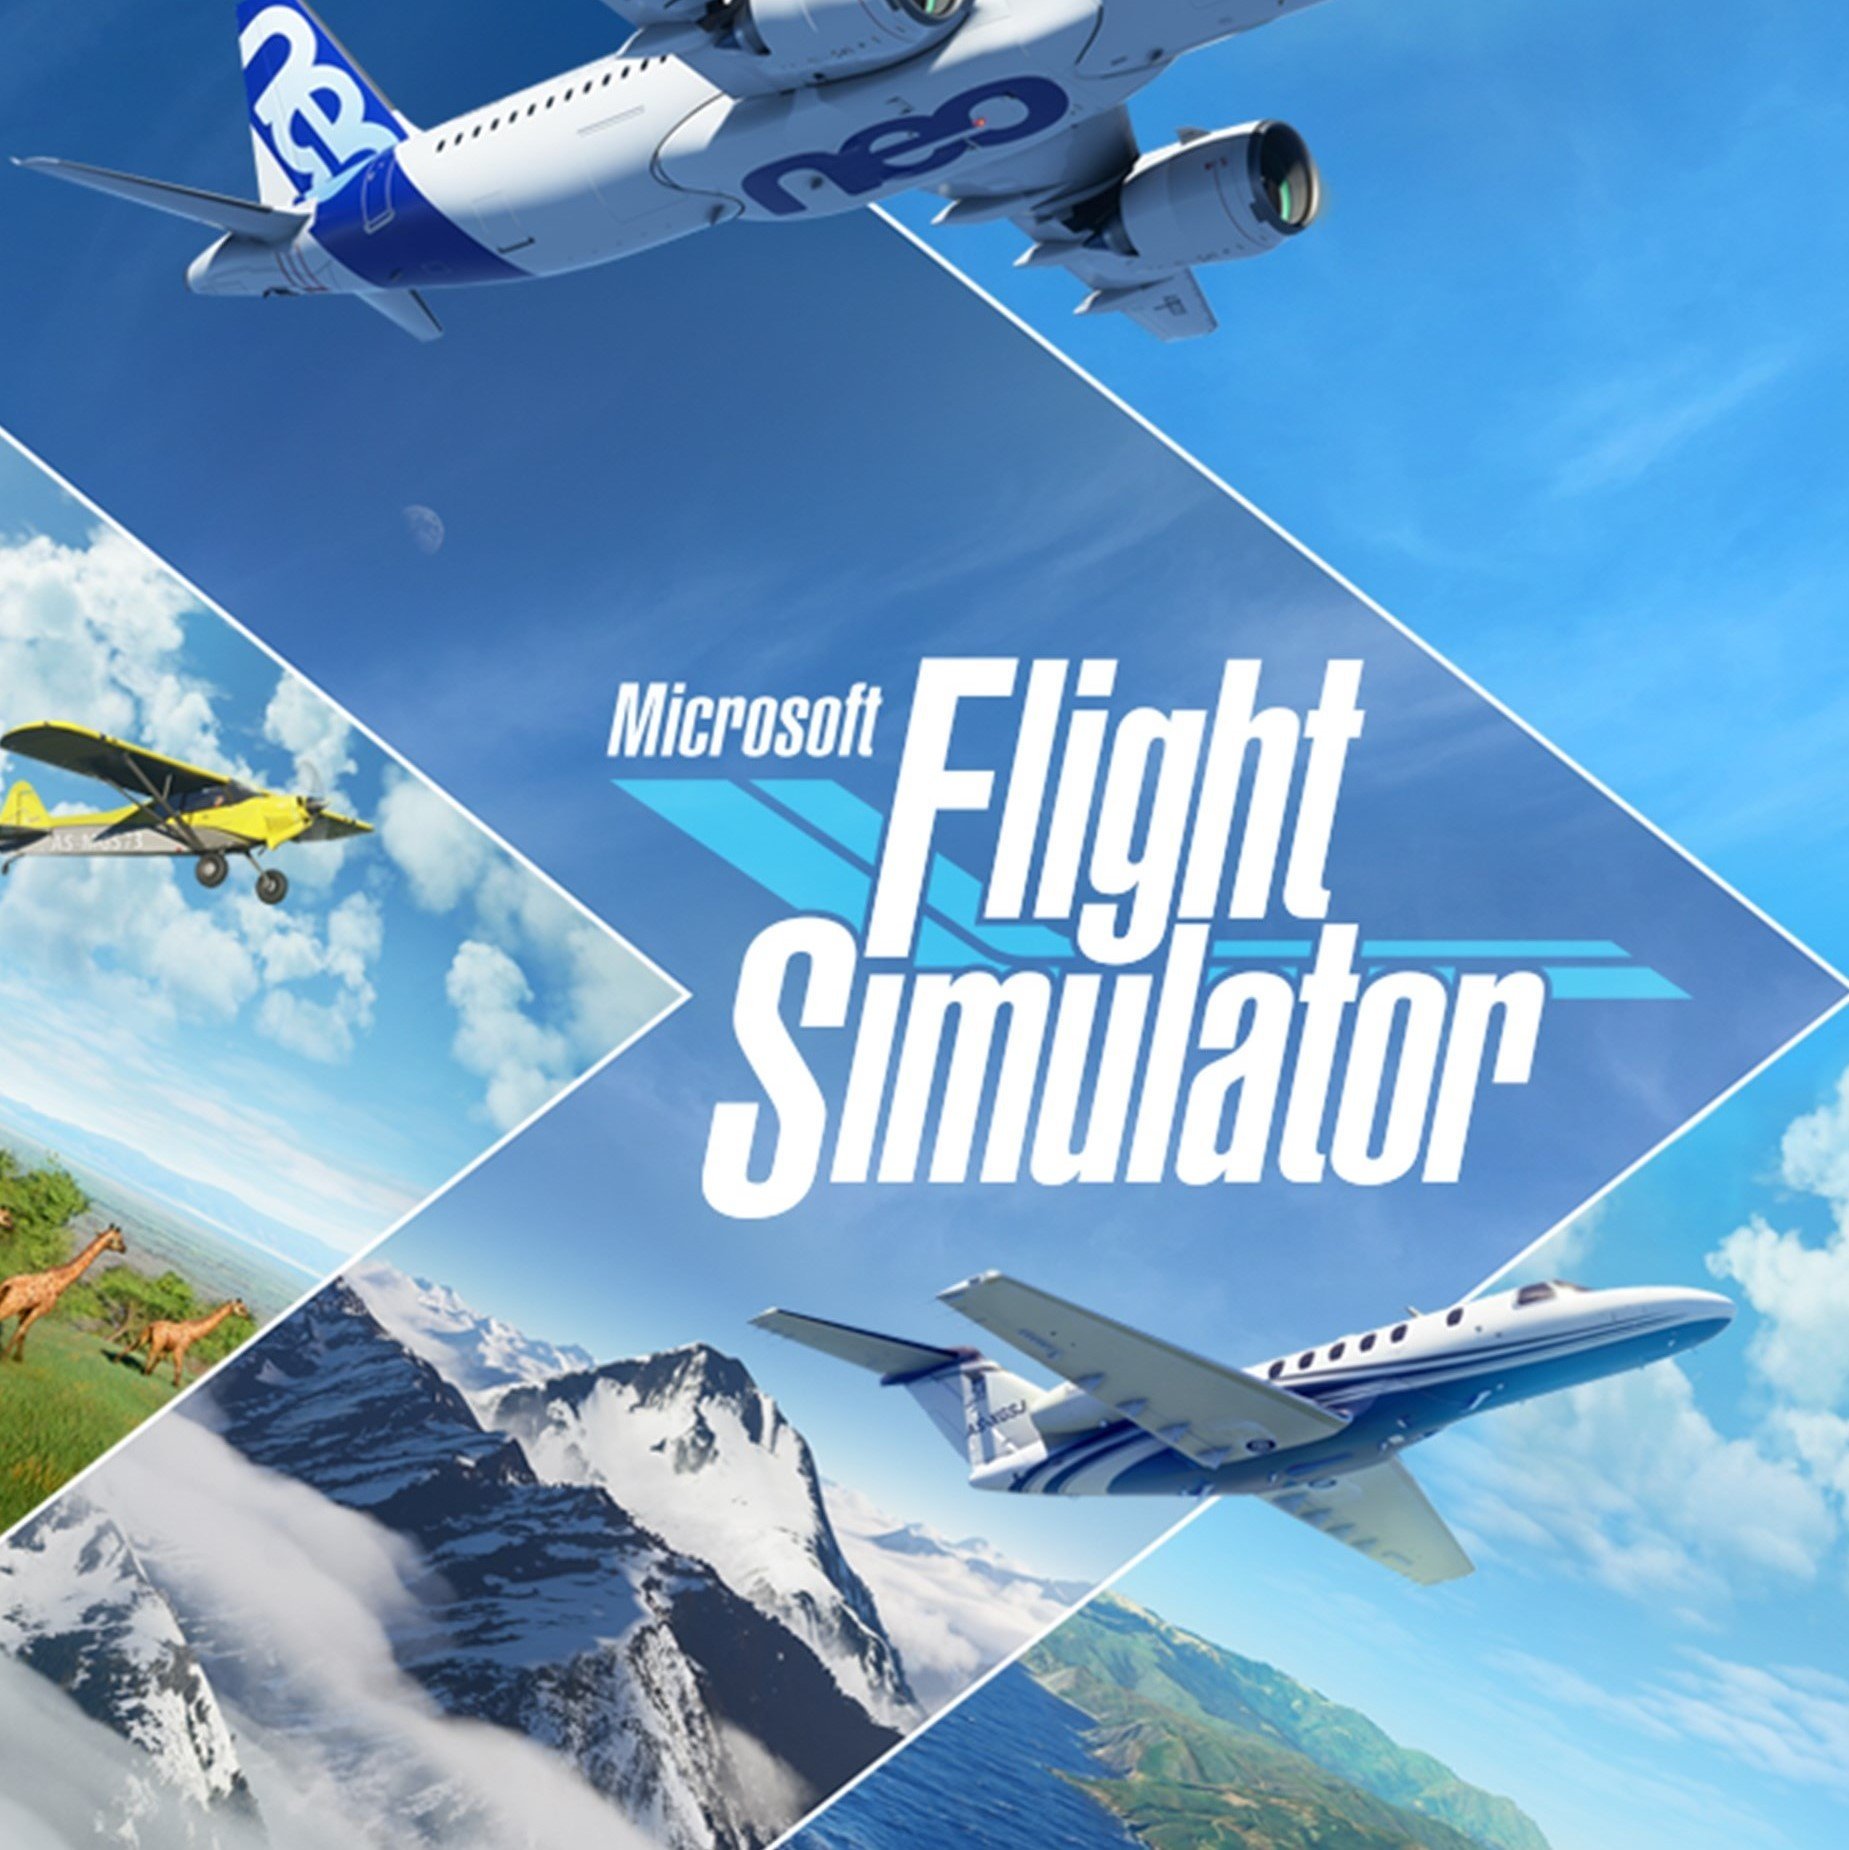 microsoft-flight-simulator-2020-box-art-square-3676432492.jpg